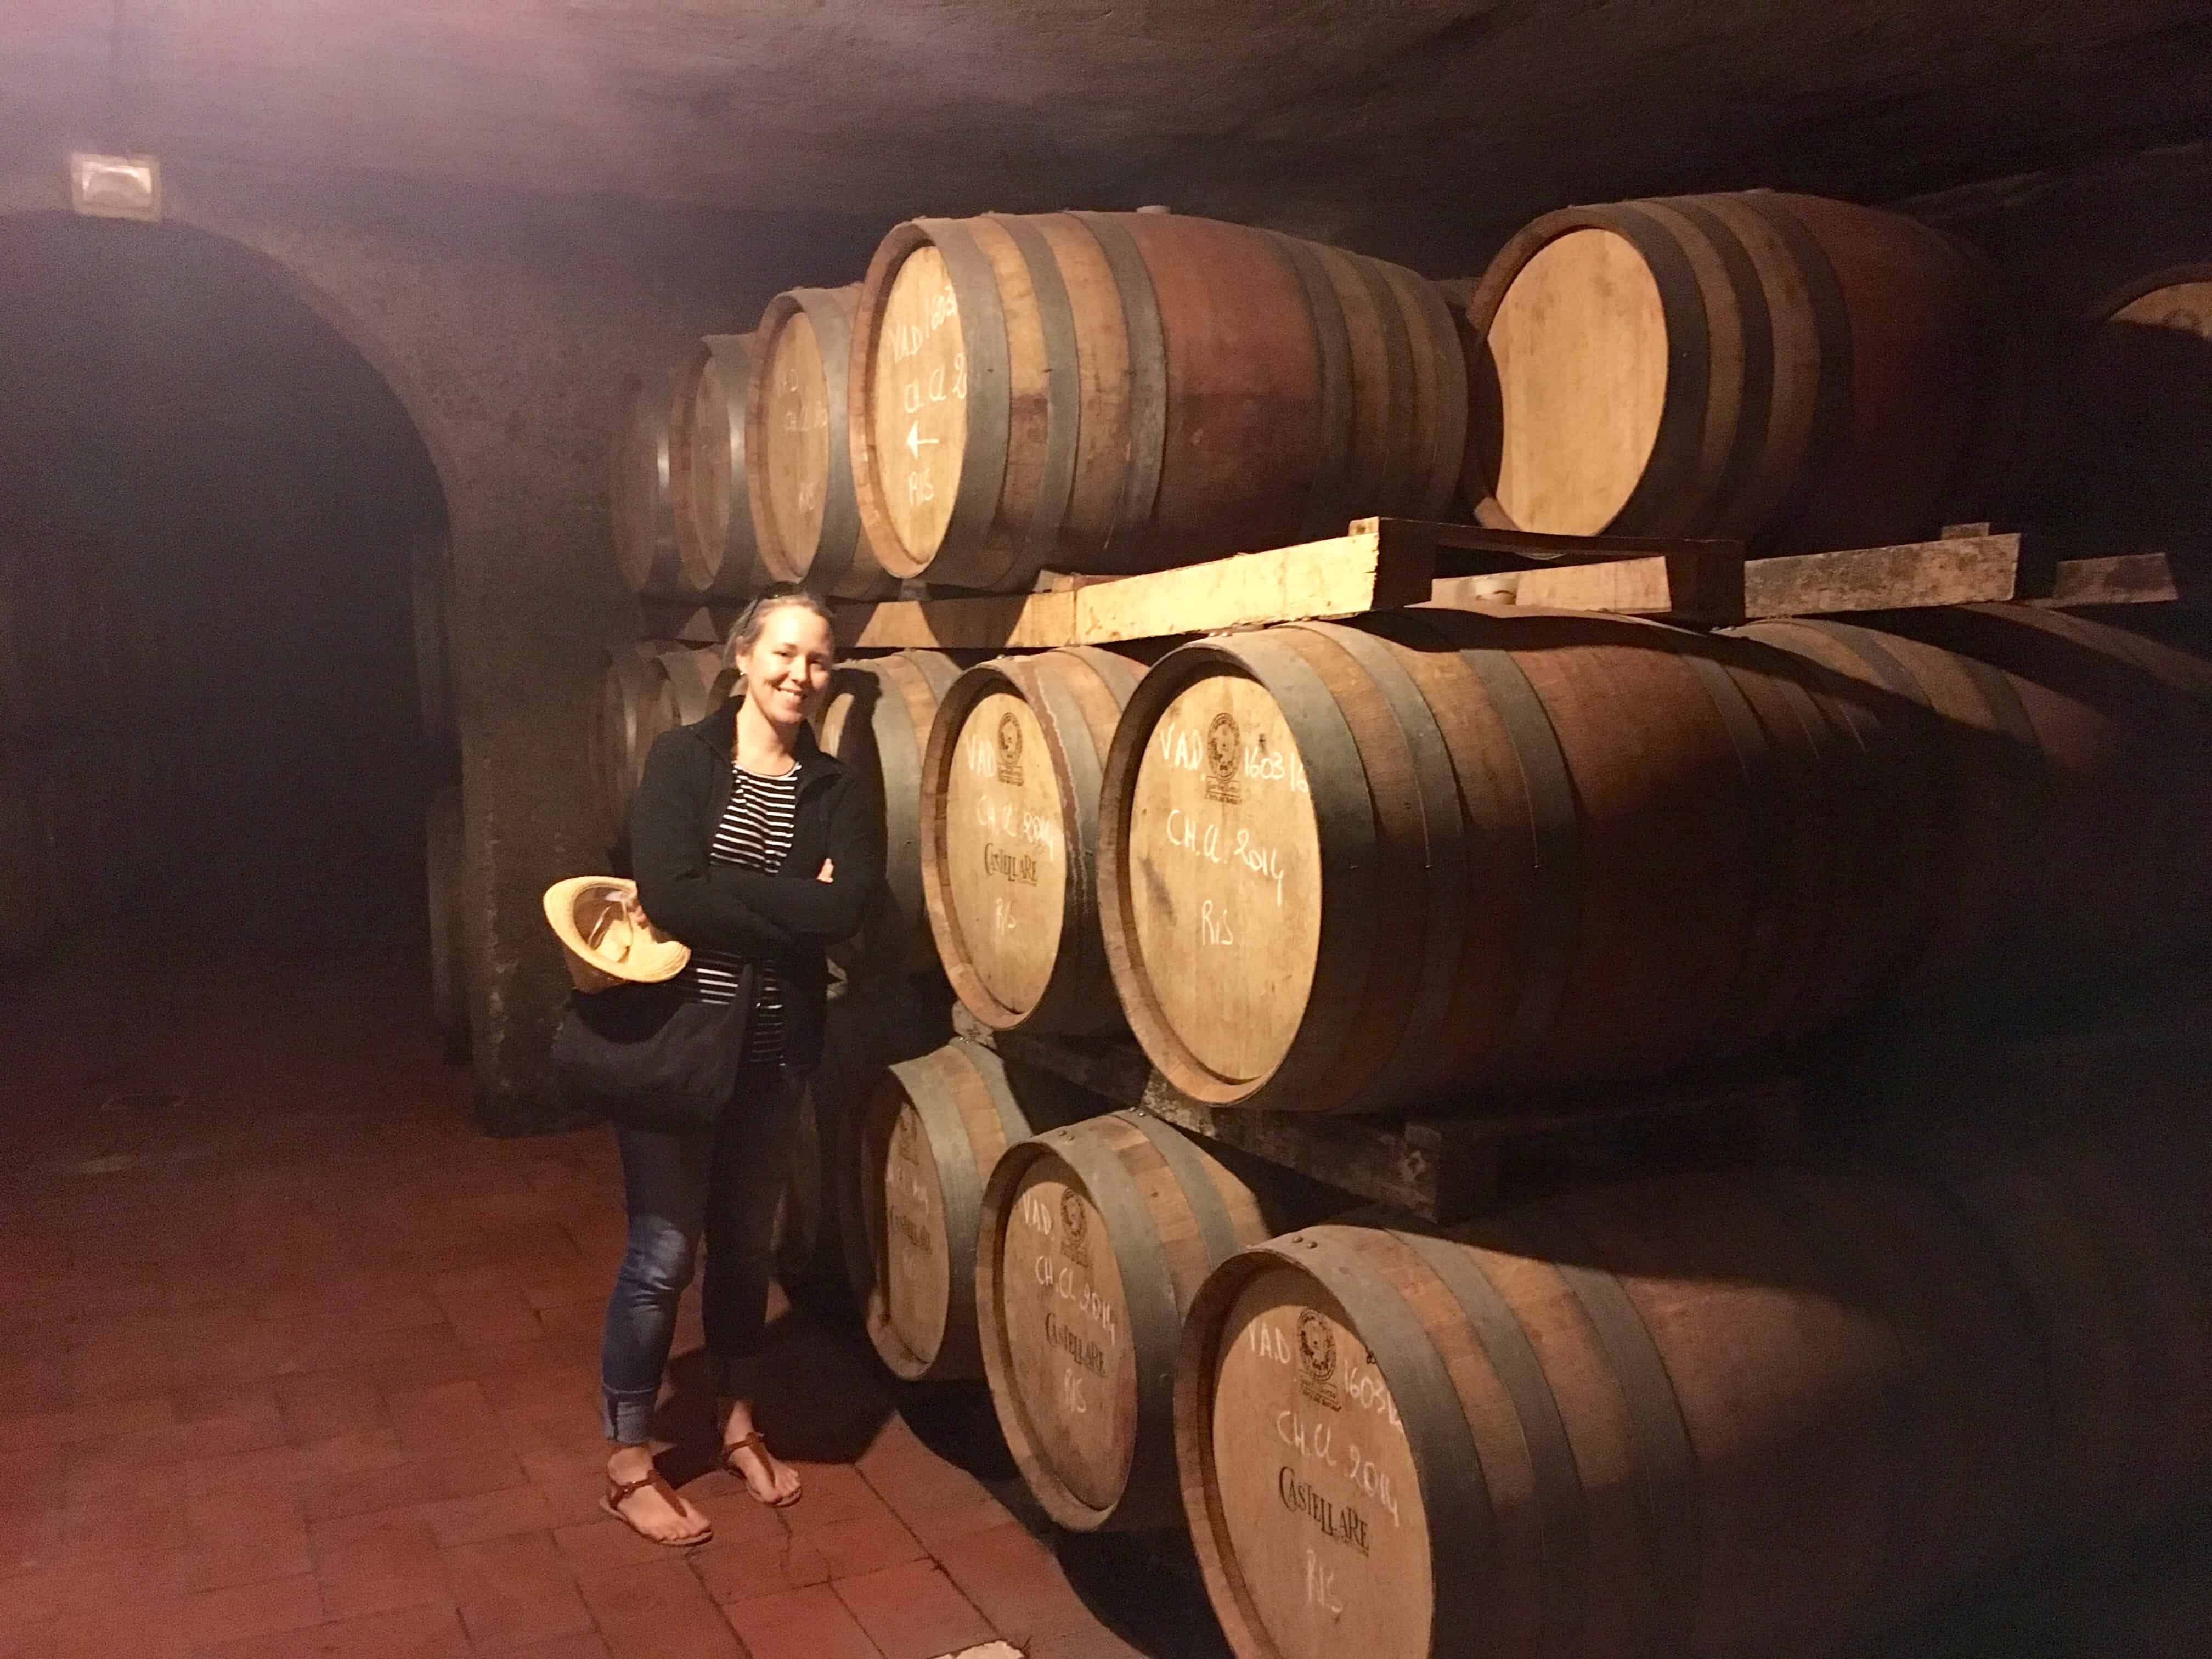 Wine barrels at Castellina Winery in Chianti, Italy